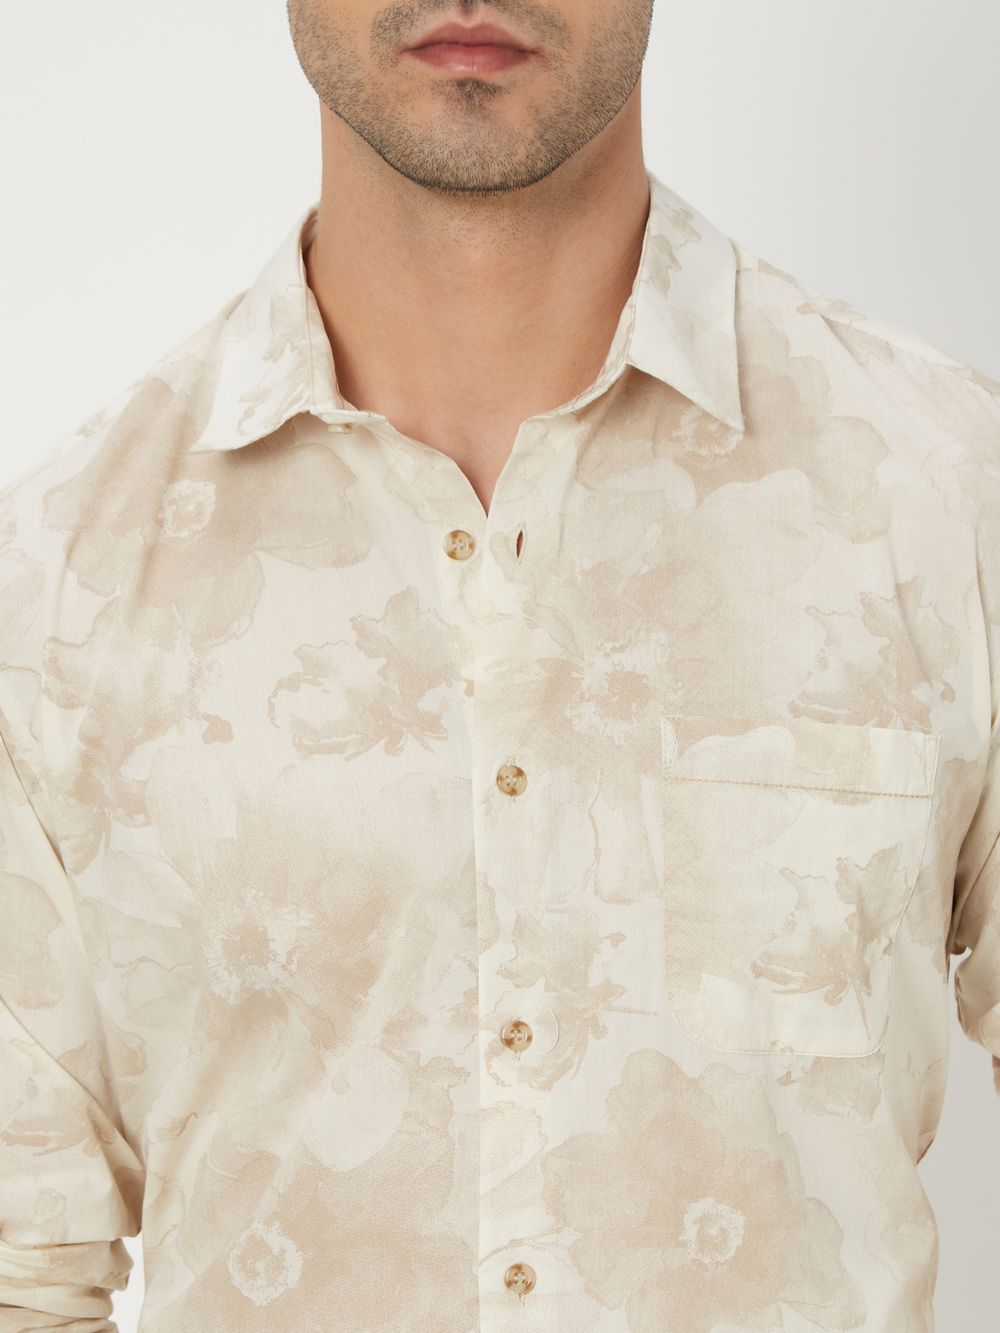 Beige & White Floral Print Shirt